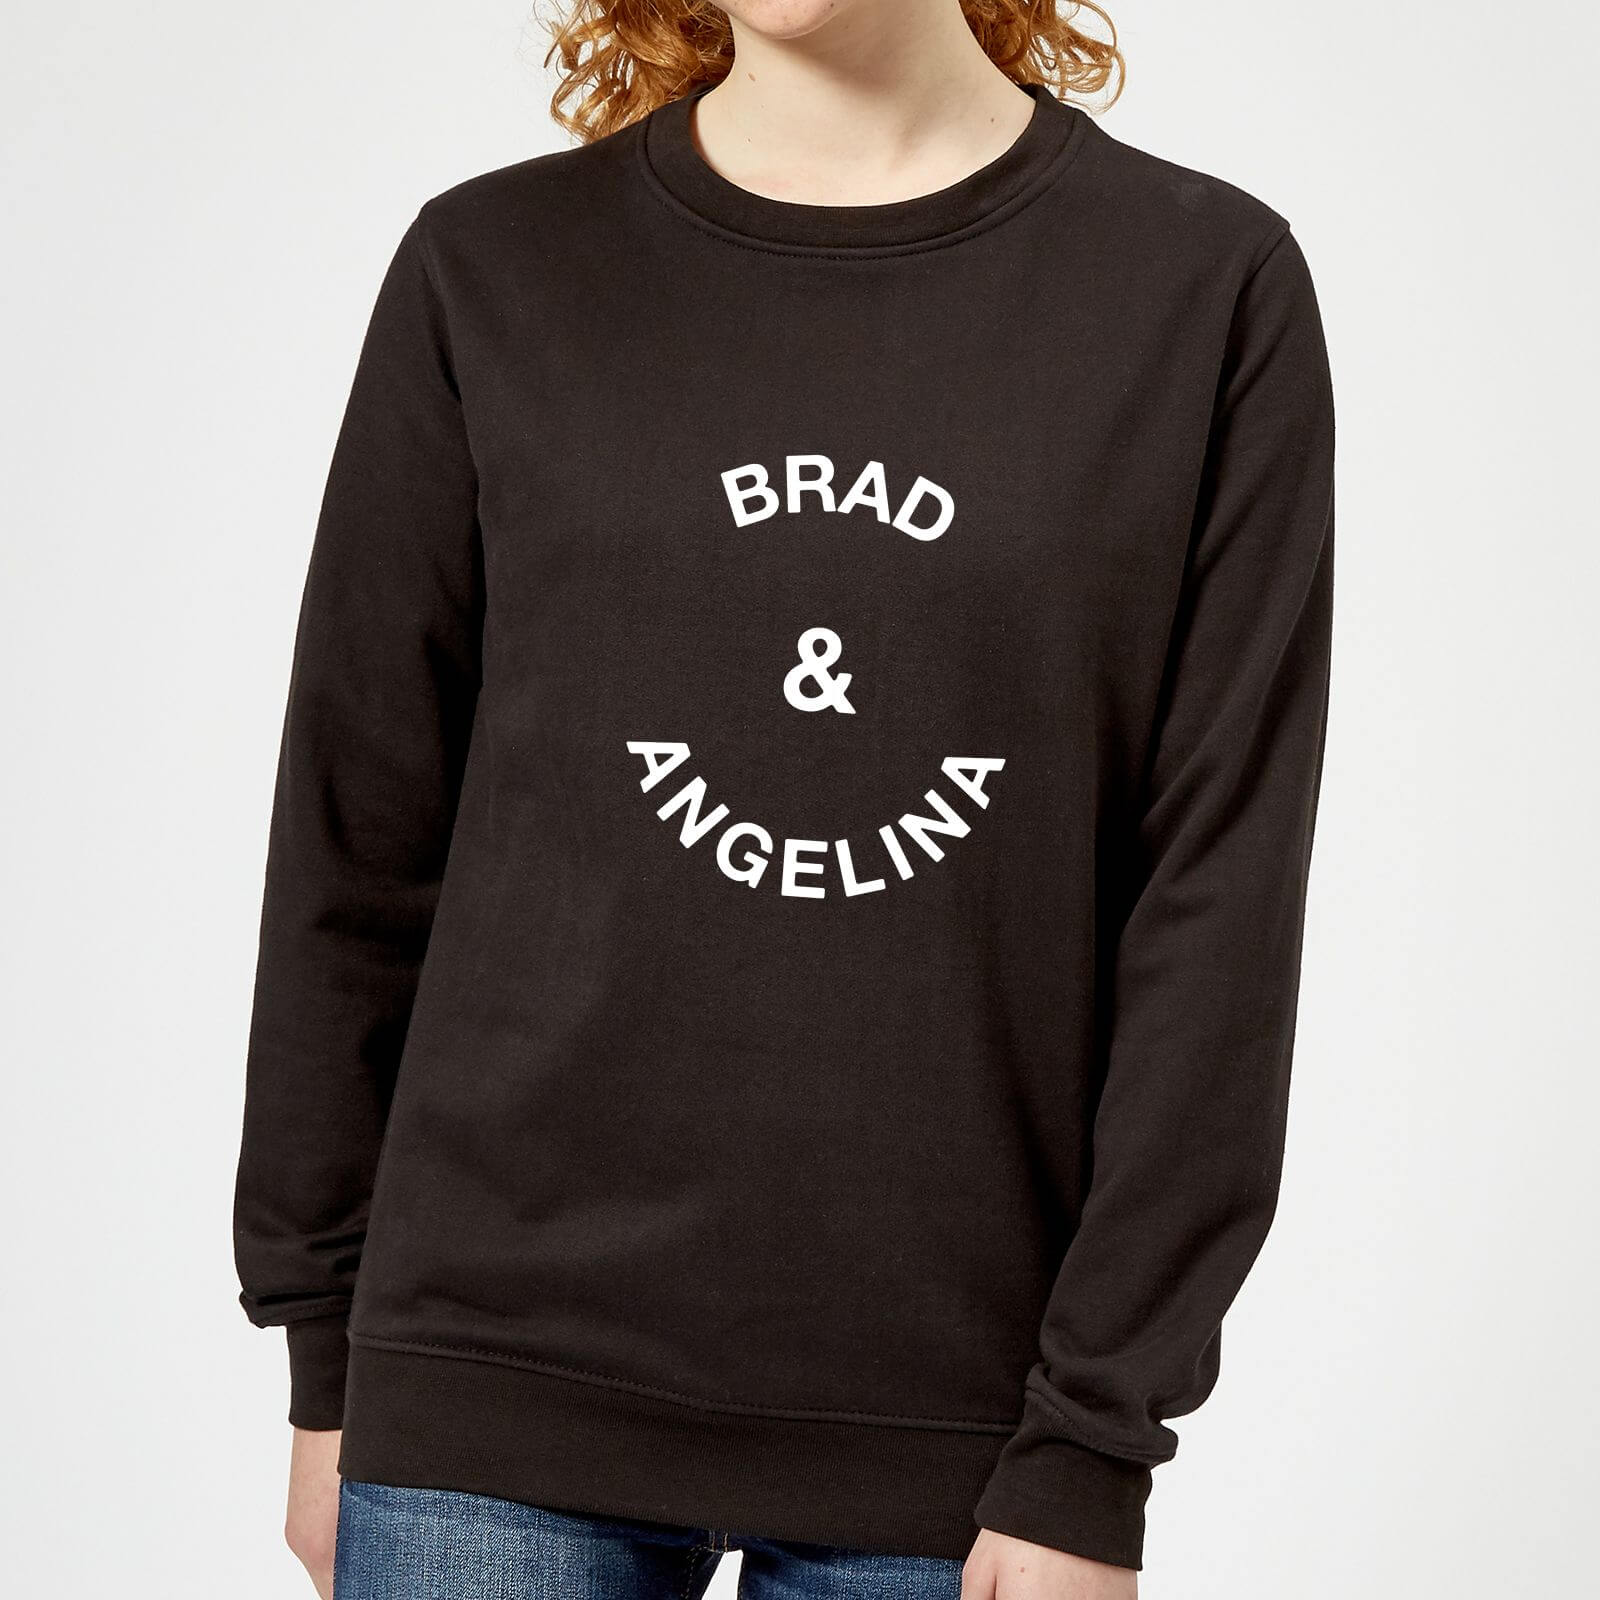 Brad & Angelina Women's Sweatshirt - Black - 5XL - Black